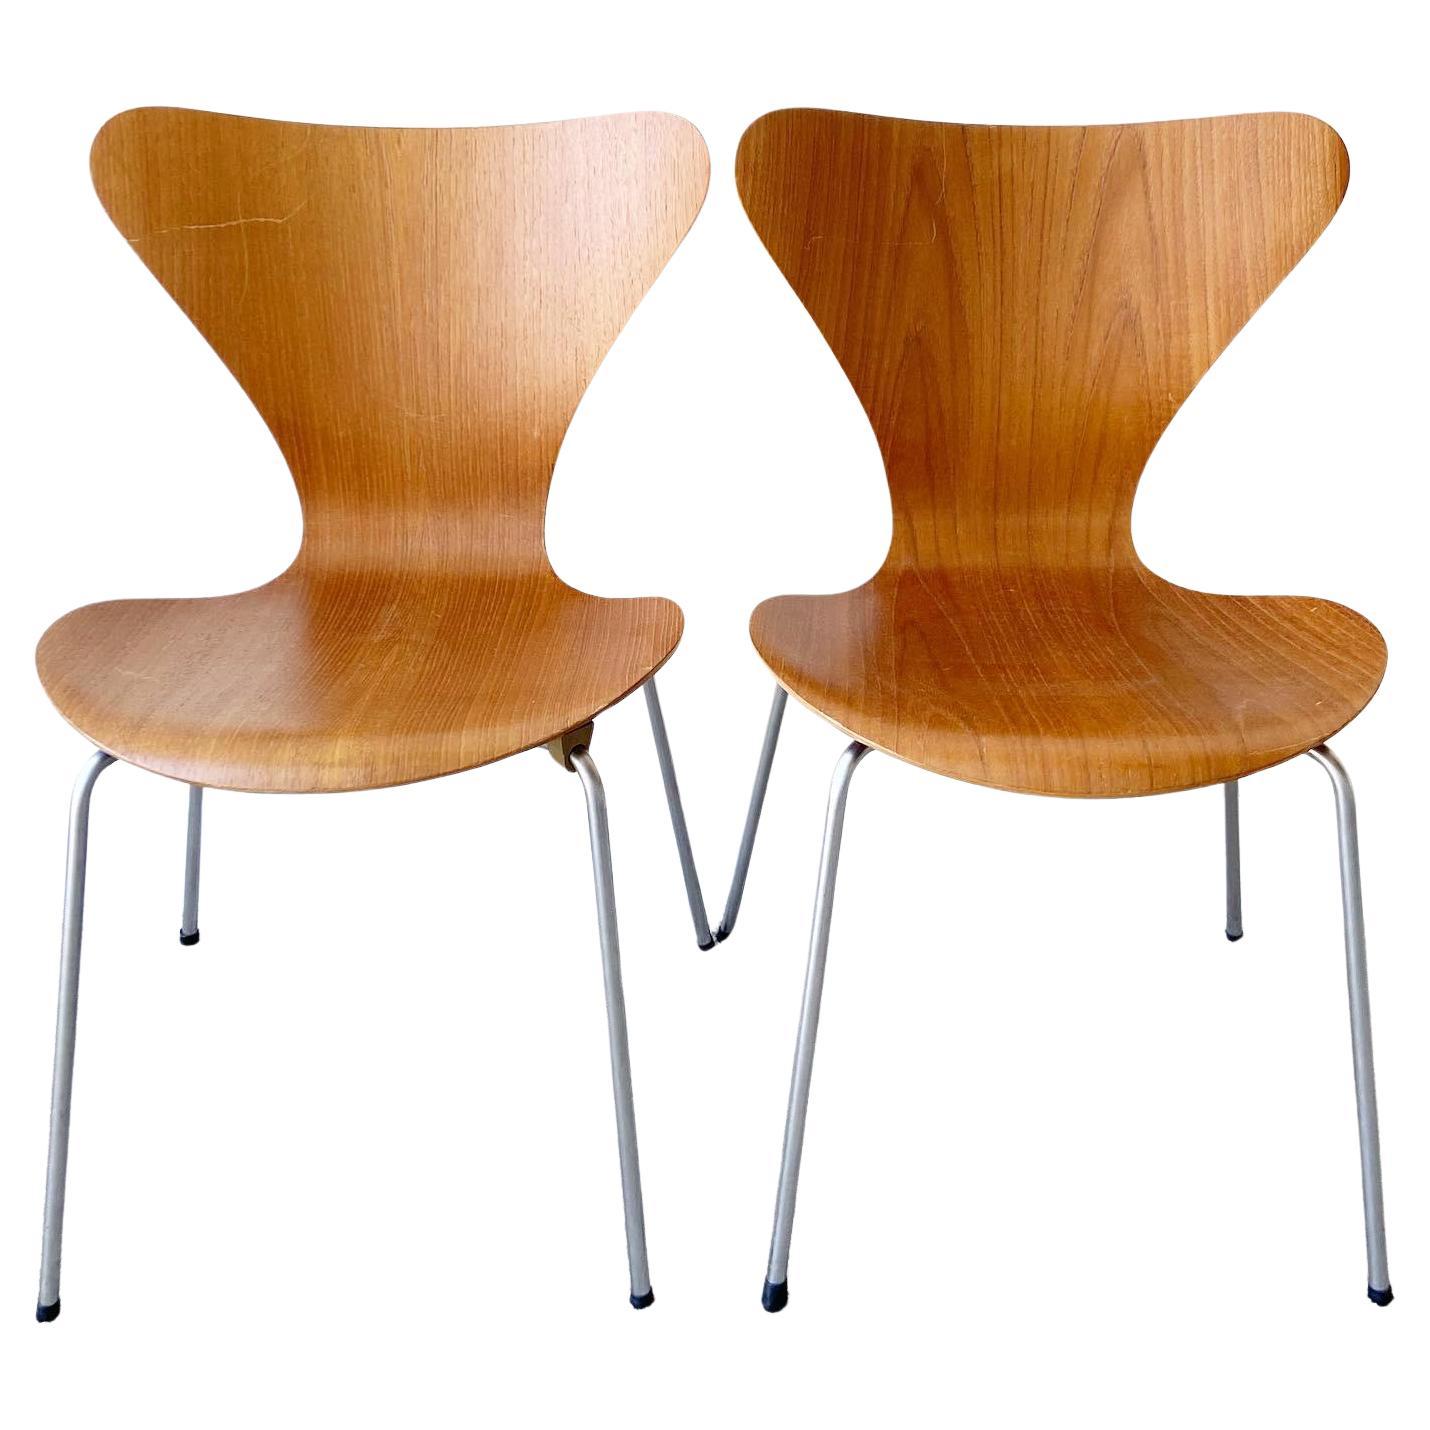 4 Mid Century Modern Arne Jacobsen for Fritz Hansen style Danish Bentwood Chairs For Sale